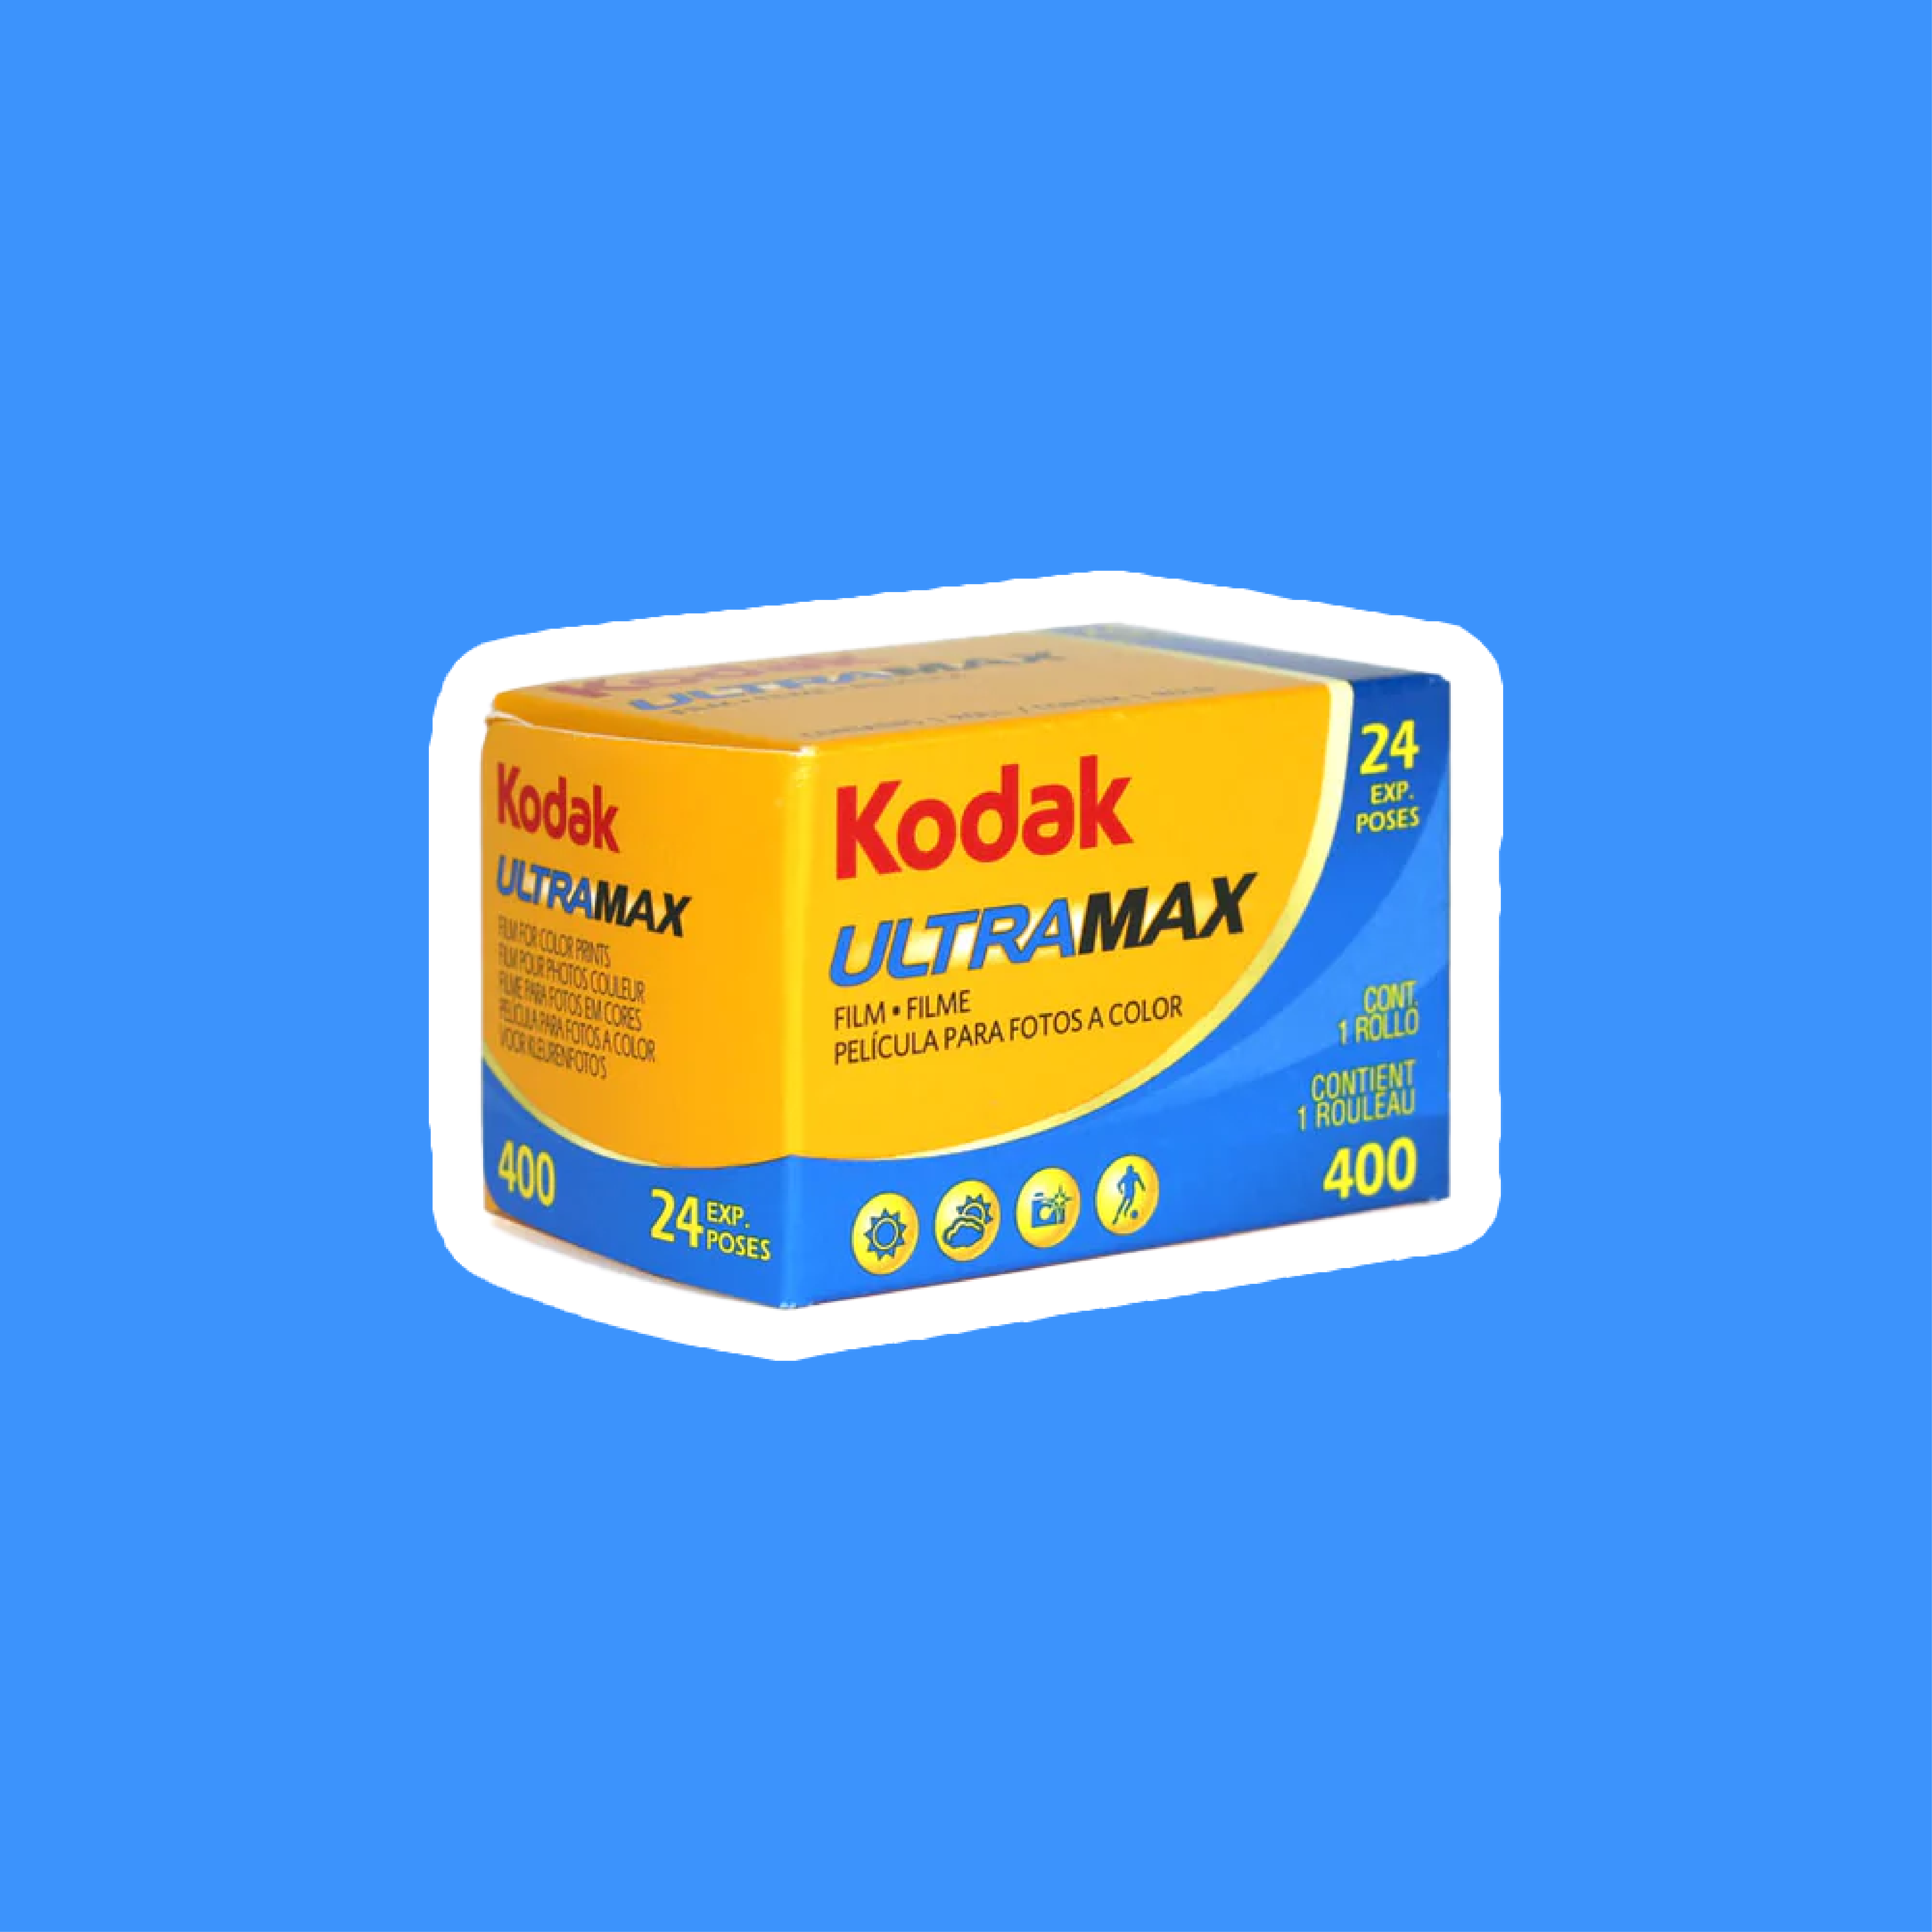 Kodak カラーネガフィルム ULTRAMAX 400 36枚撮 10個セット - カメラ